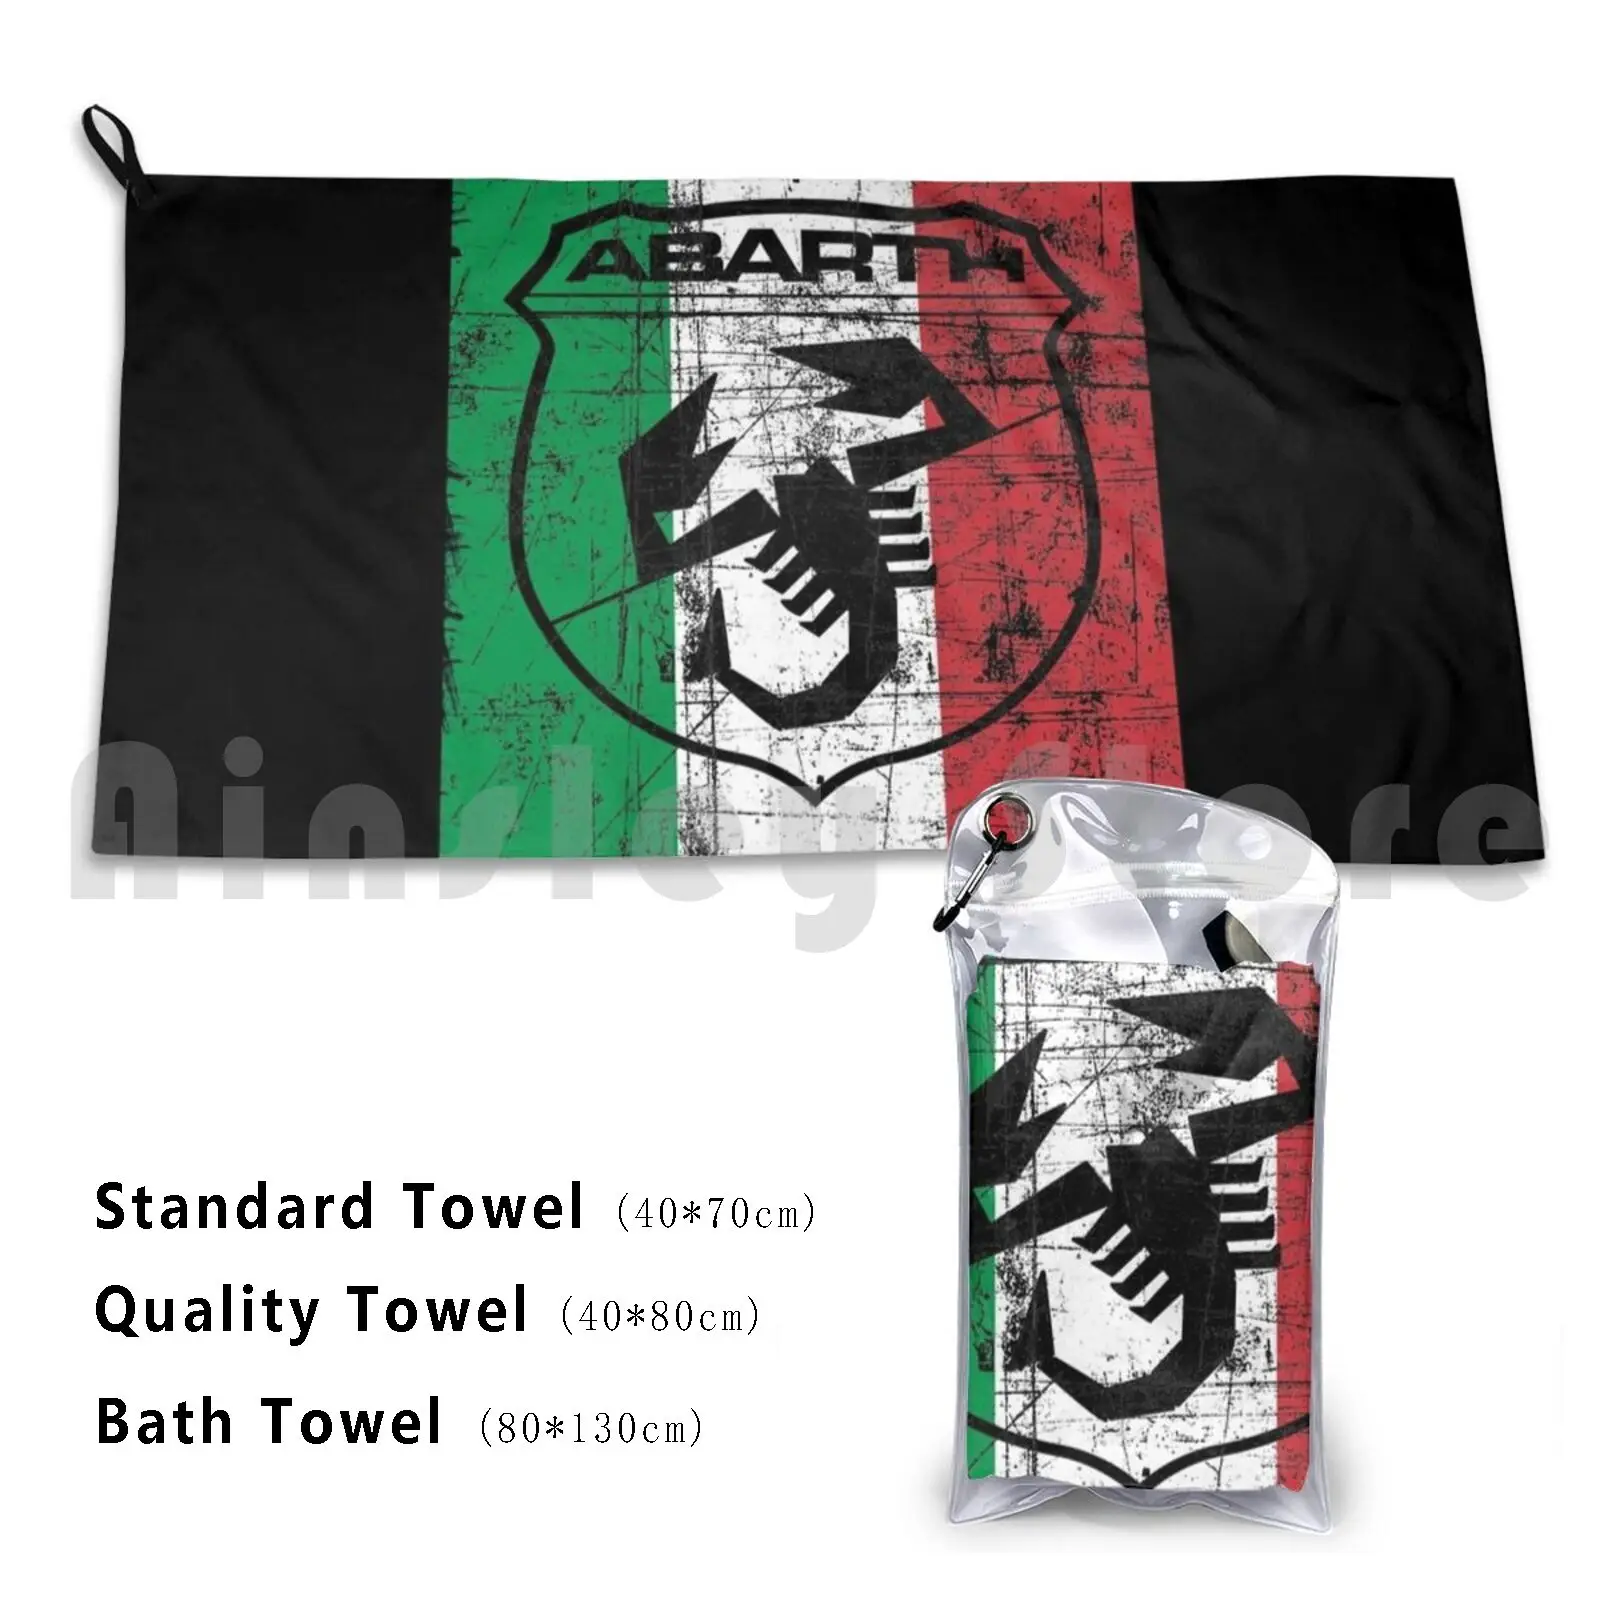 Abarth Shield On Italy Flag Bath Towel Beach Cushion Abarth Scorpion Flag Italy Tricolor Red Black Cars